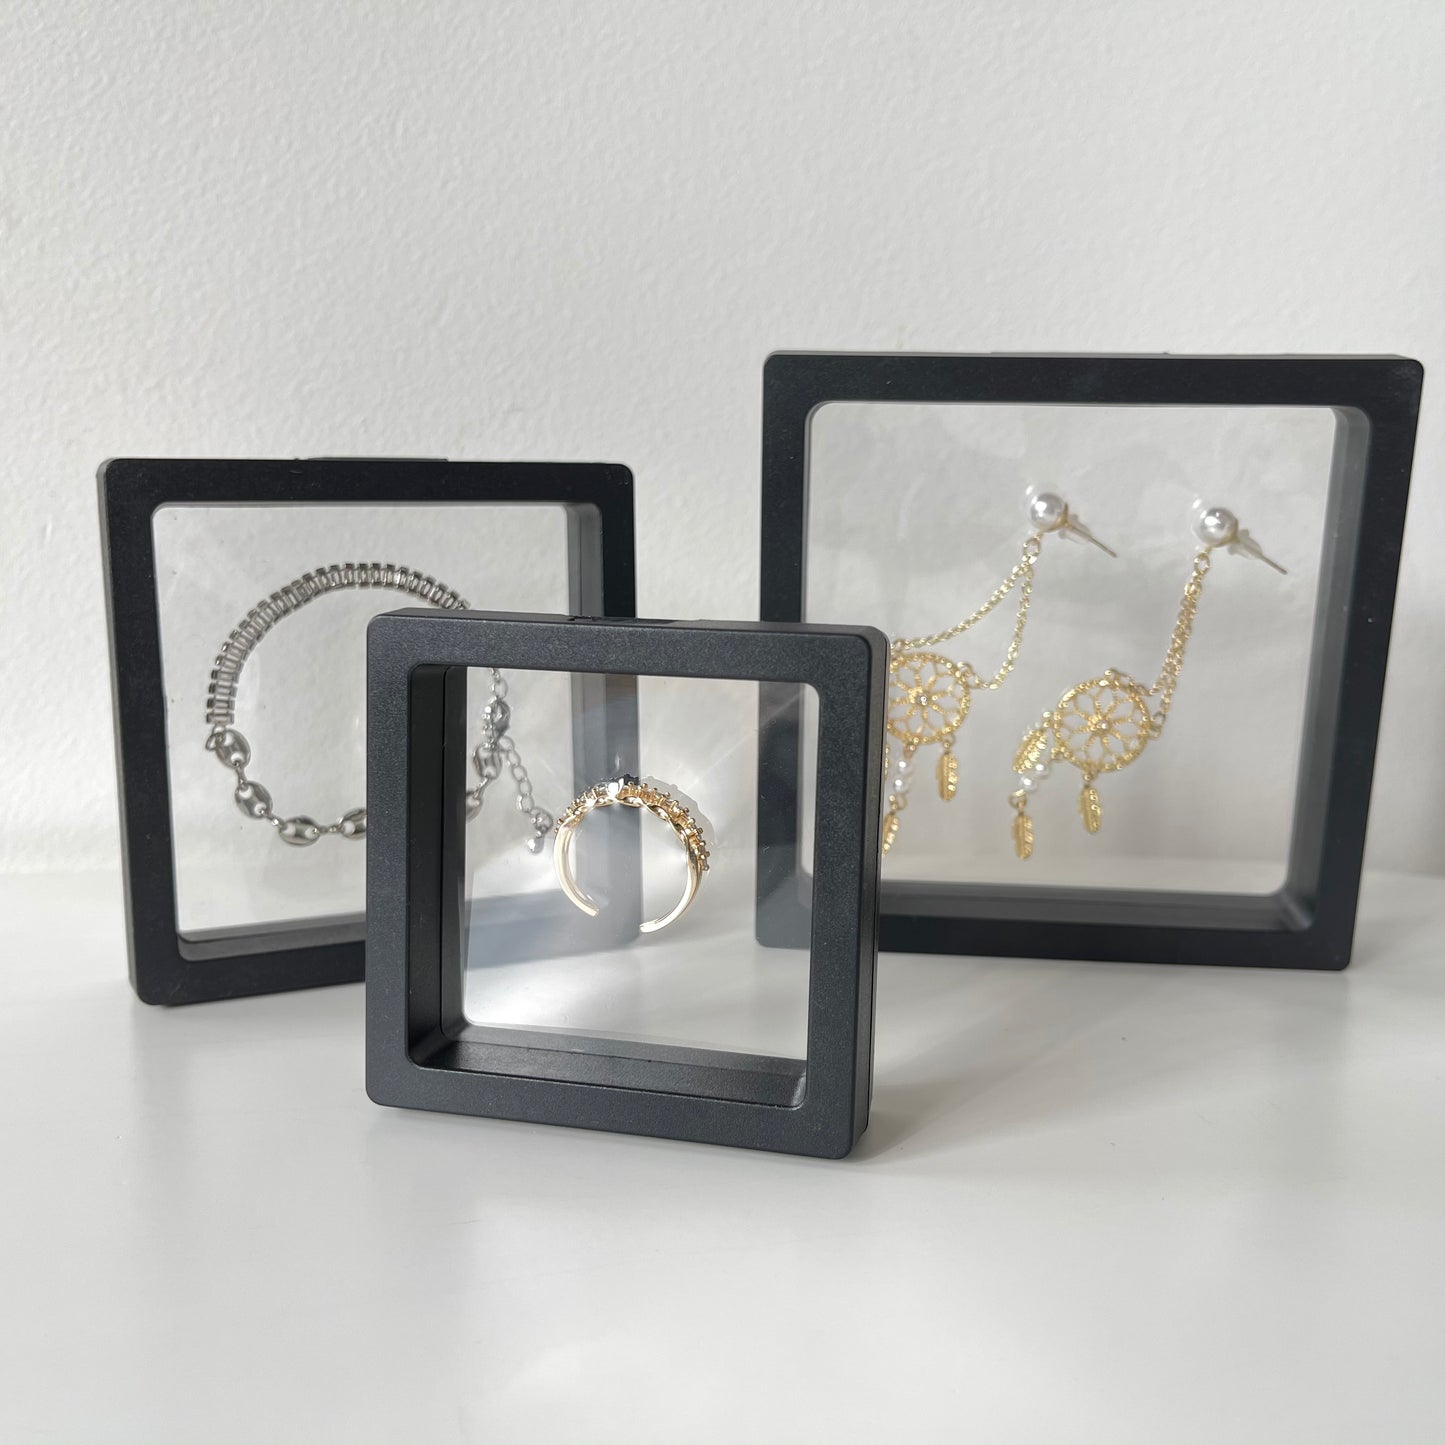 Transparent Suspended Floating Display Jewellery Storage Box 7x7x2cm Black